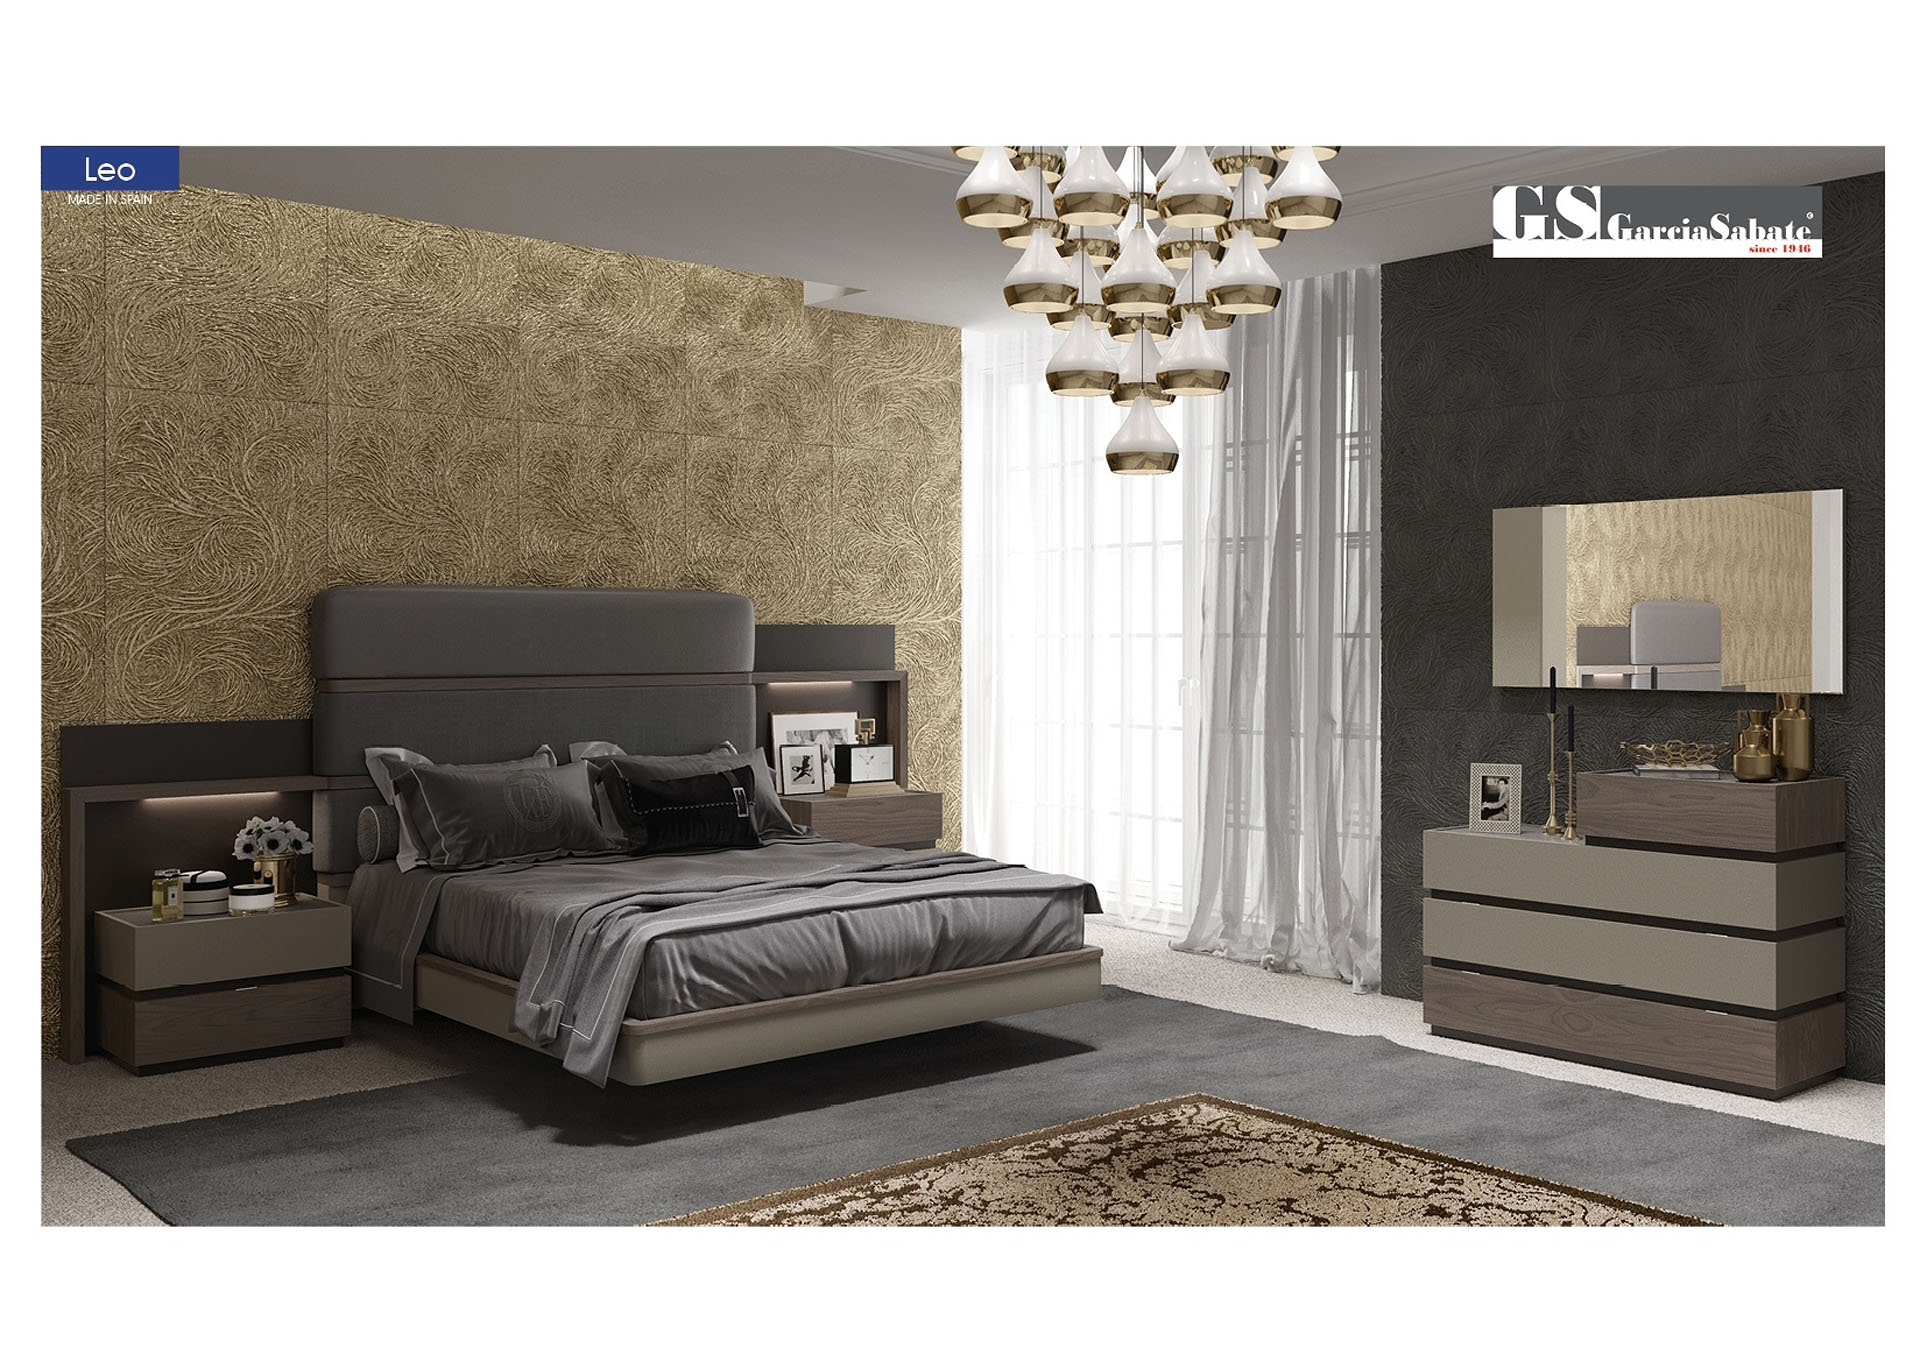 Leo Beige & Brown Storage Queen Bed,ESF Wholesale Furniture